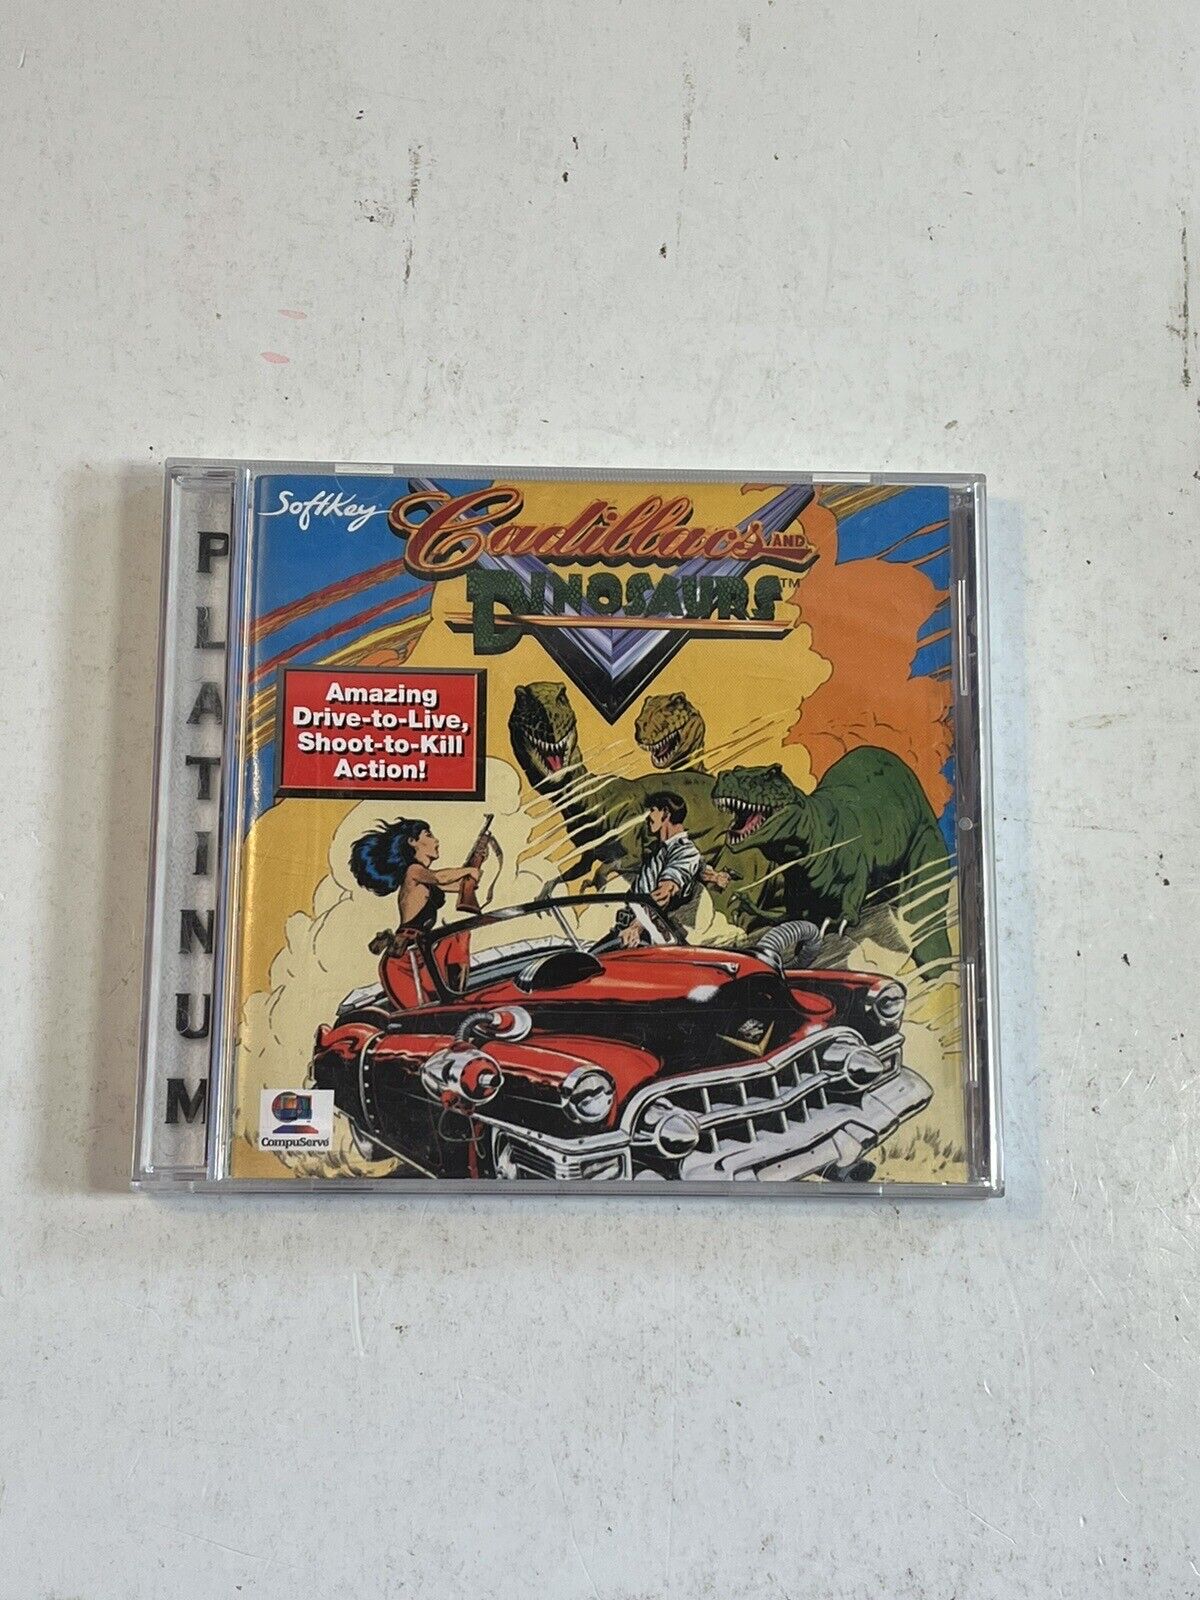 Cadillacs and Dinosaurs PC CD Rom Game MS-Dos Rare CIB Nice Condition